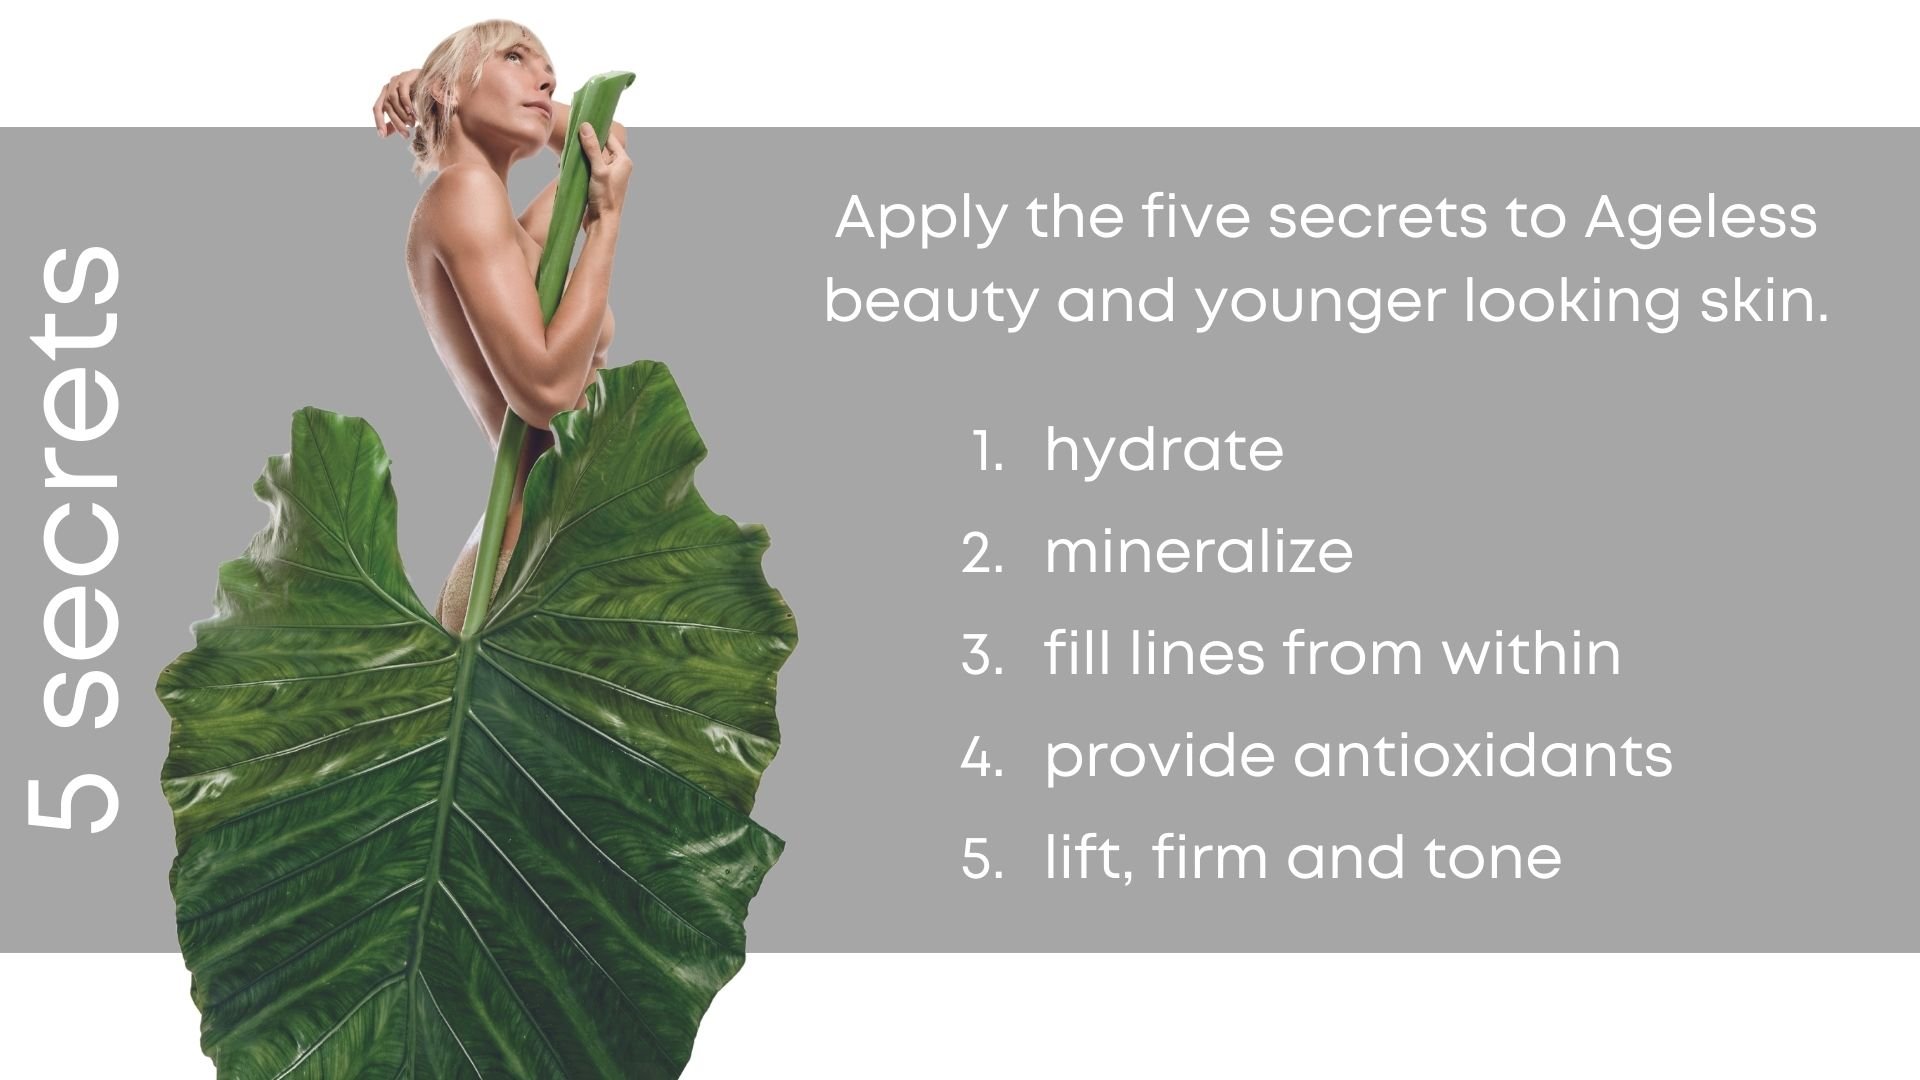 apply-the-five-secrets-to-improve-aging-skin.jpg